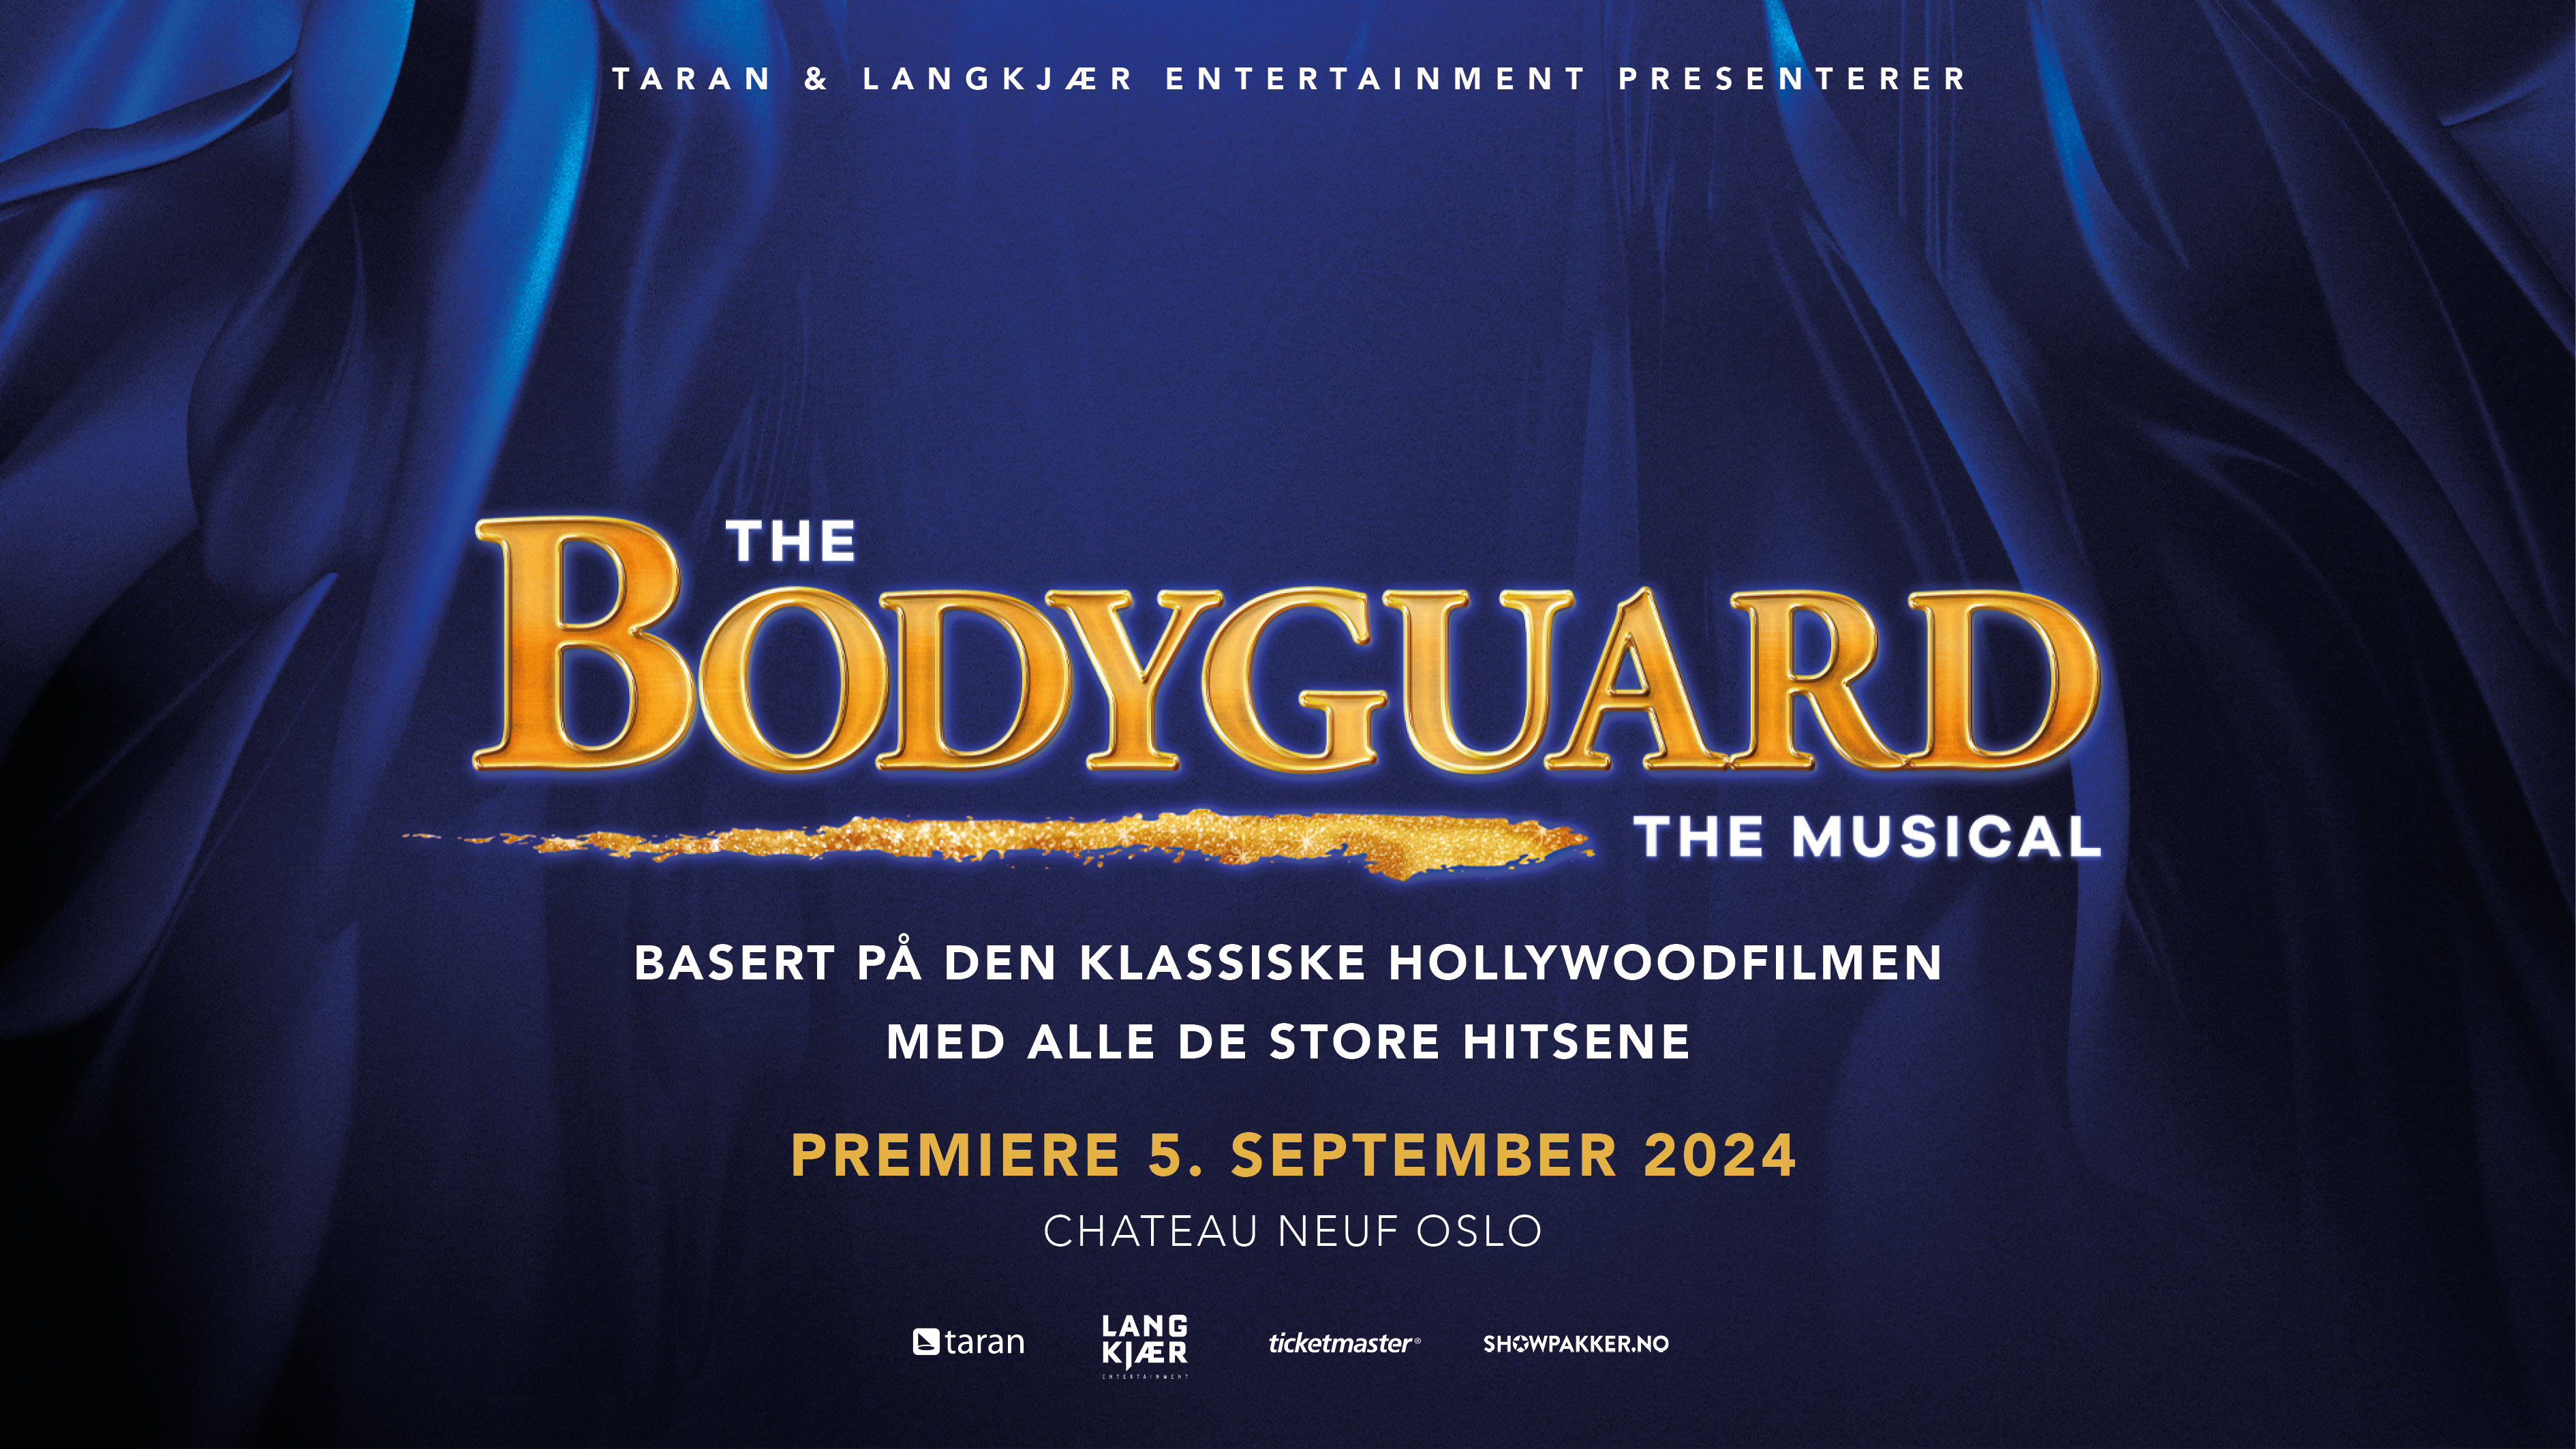 The Bodyguard - The Musical presale information on freepresalepasswords.com